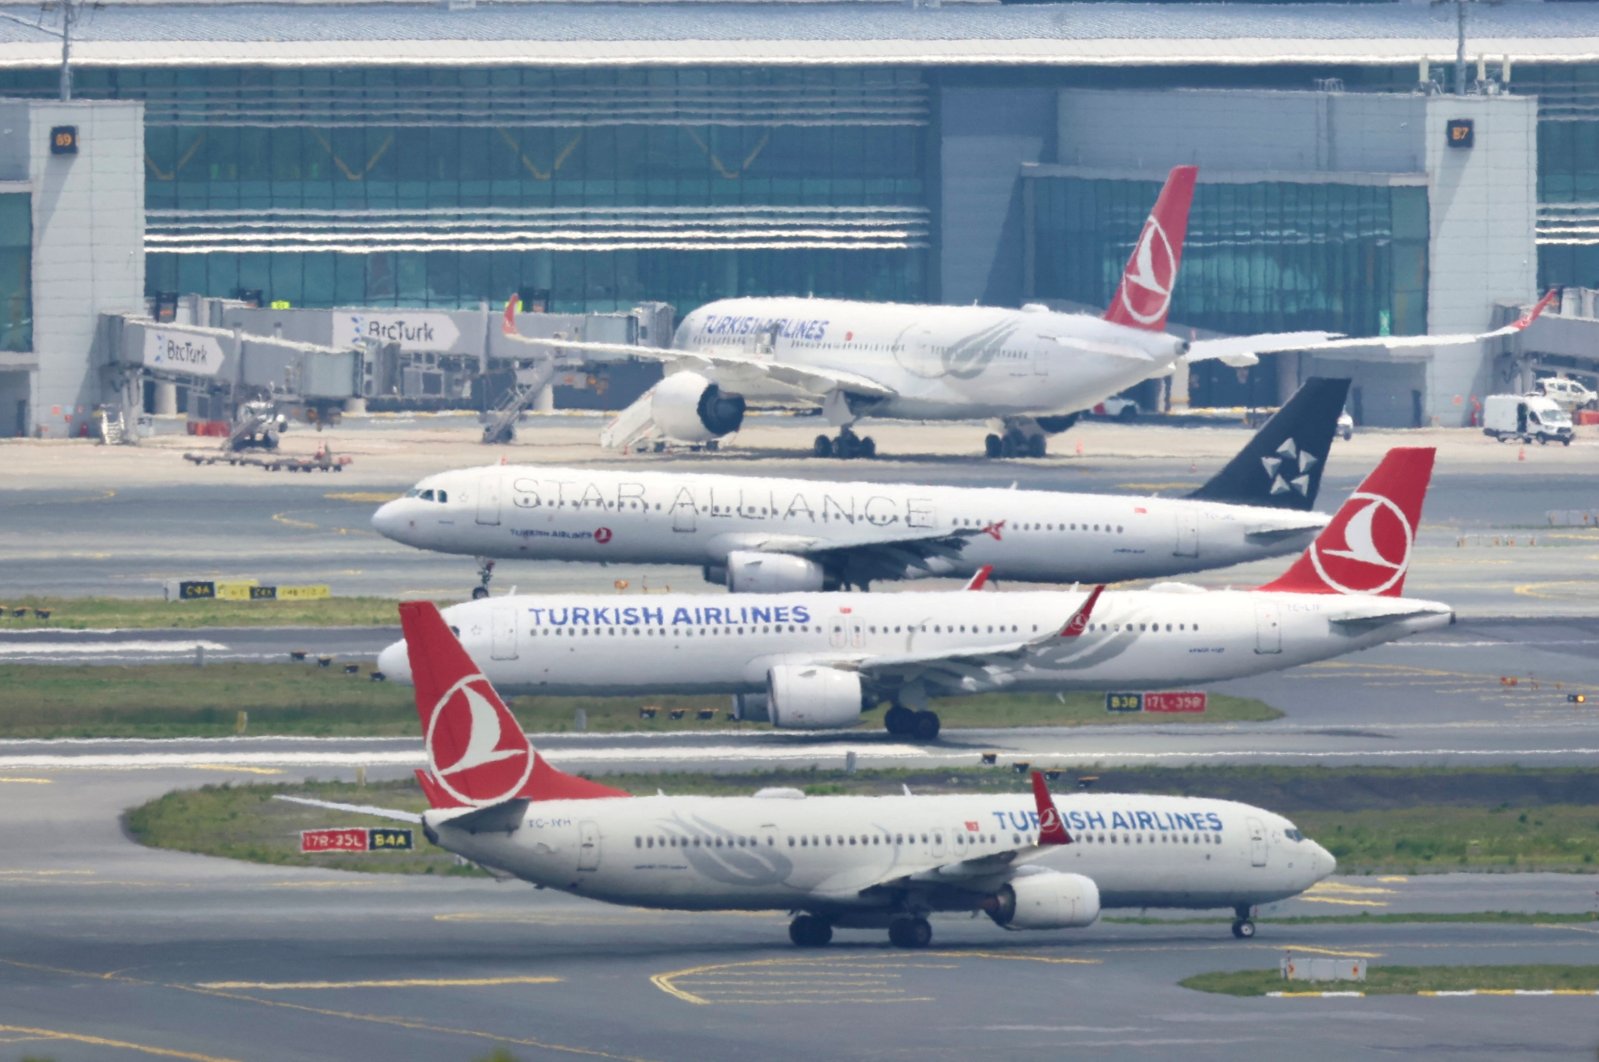 Turkish Airlines dinobatkan sebagai maskapai paling ramah lingkungan untuk kedua kalinya berturut-turut